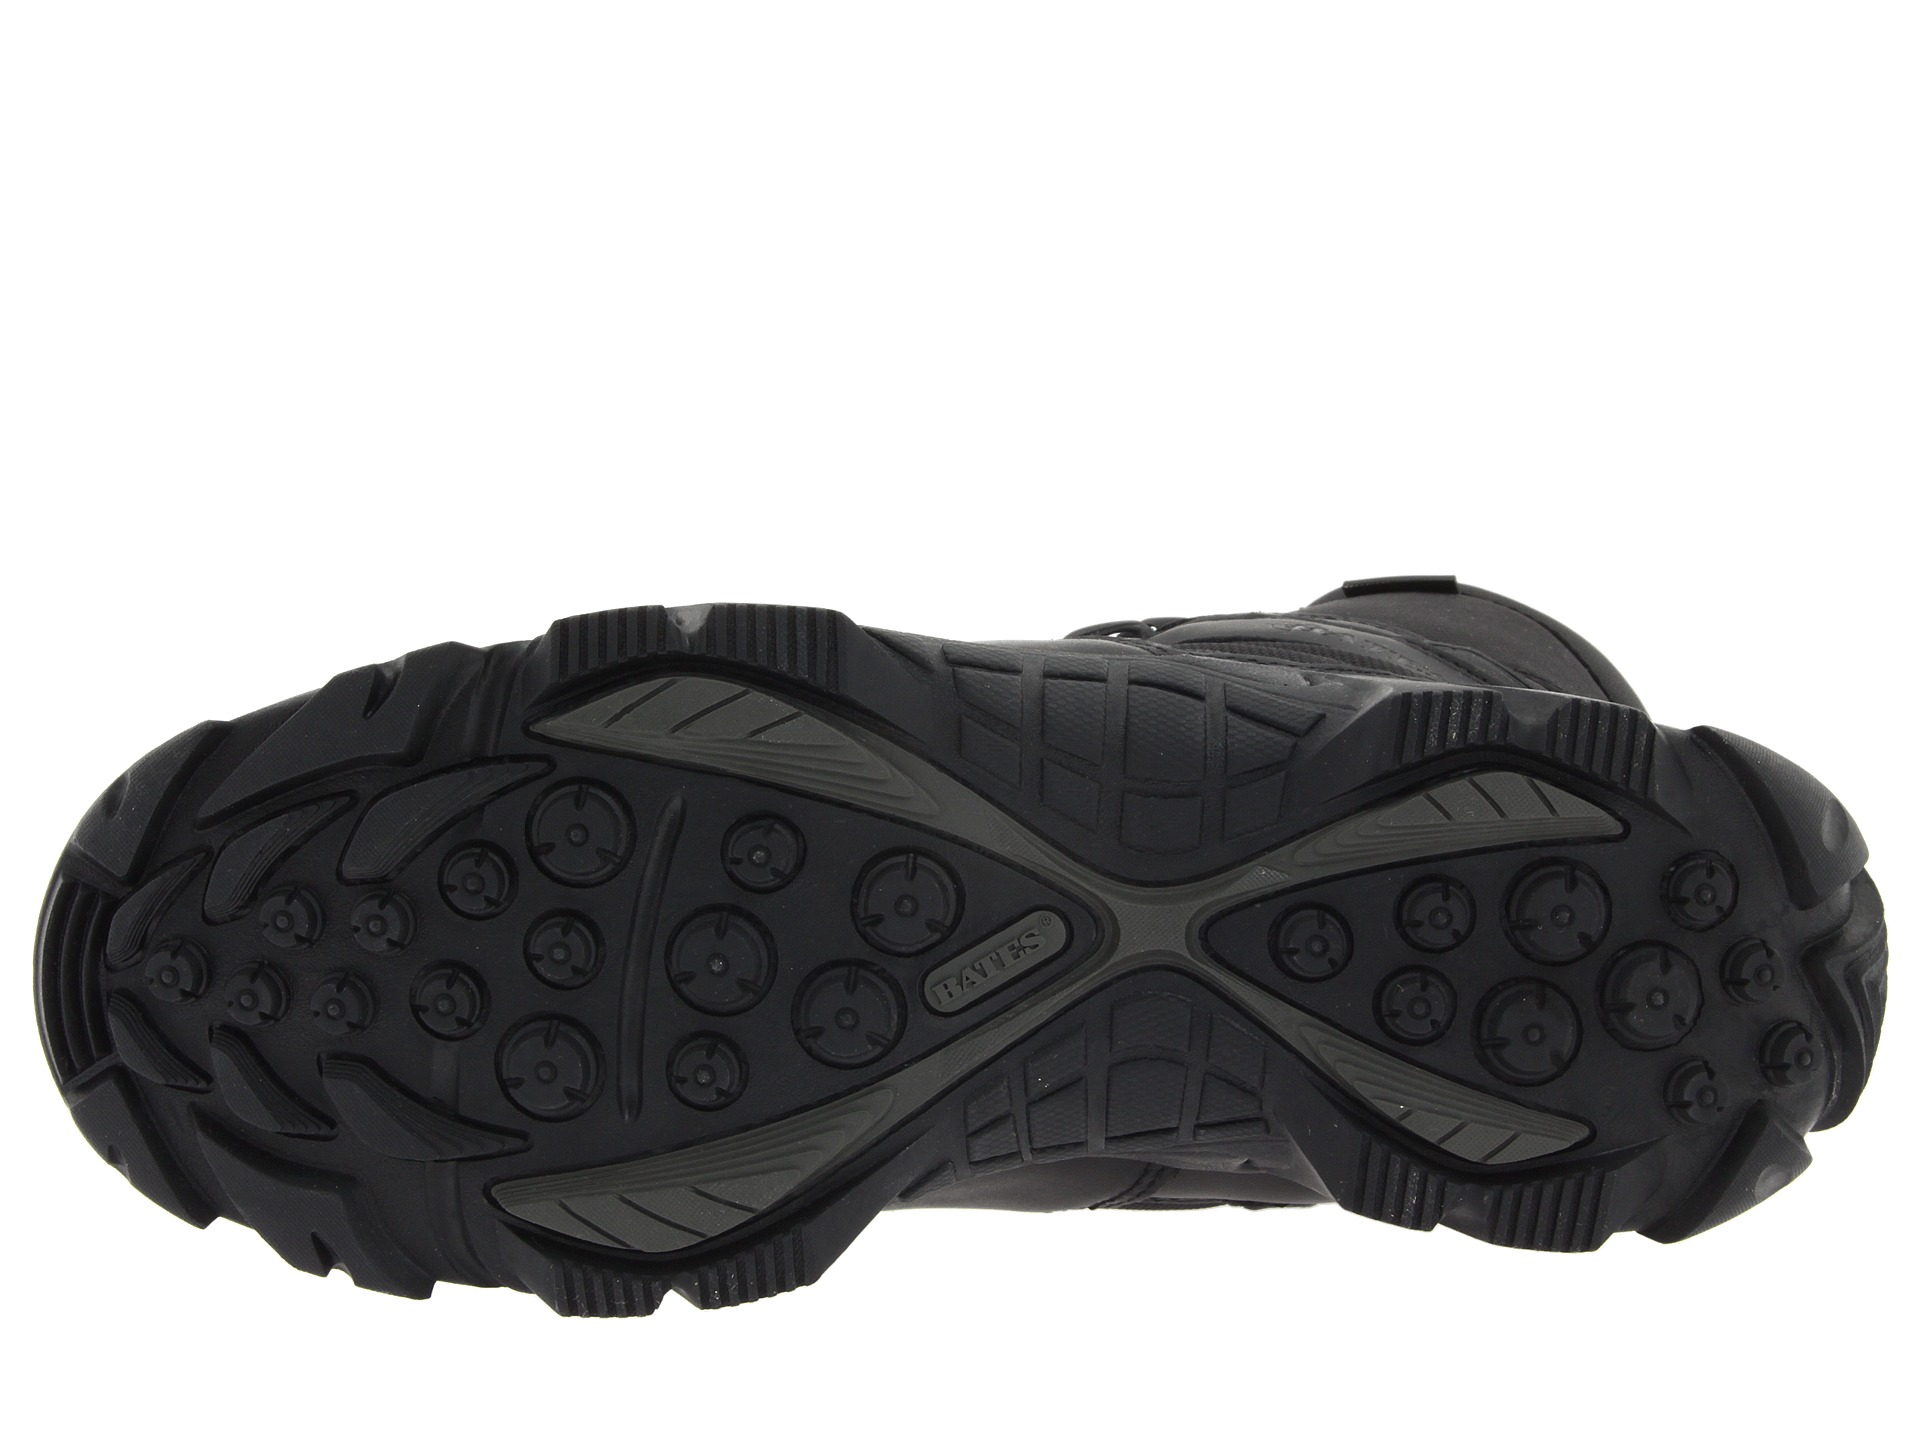 Bates Footwear GX-8 GORE-TEX® Side-Zip Boot at Zappos.com